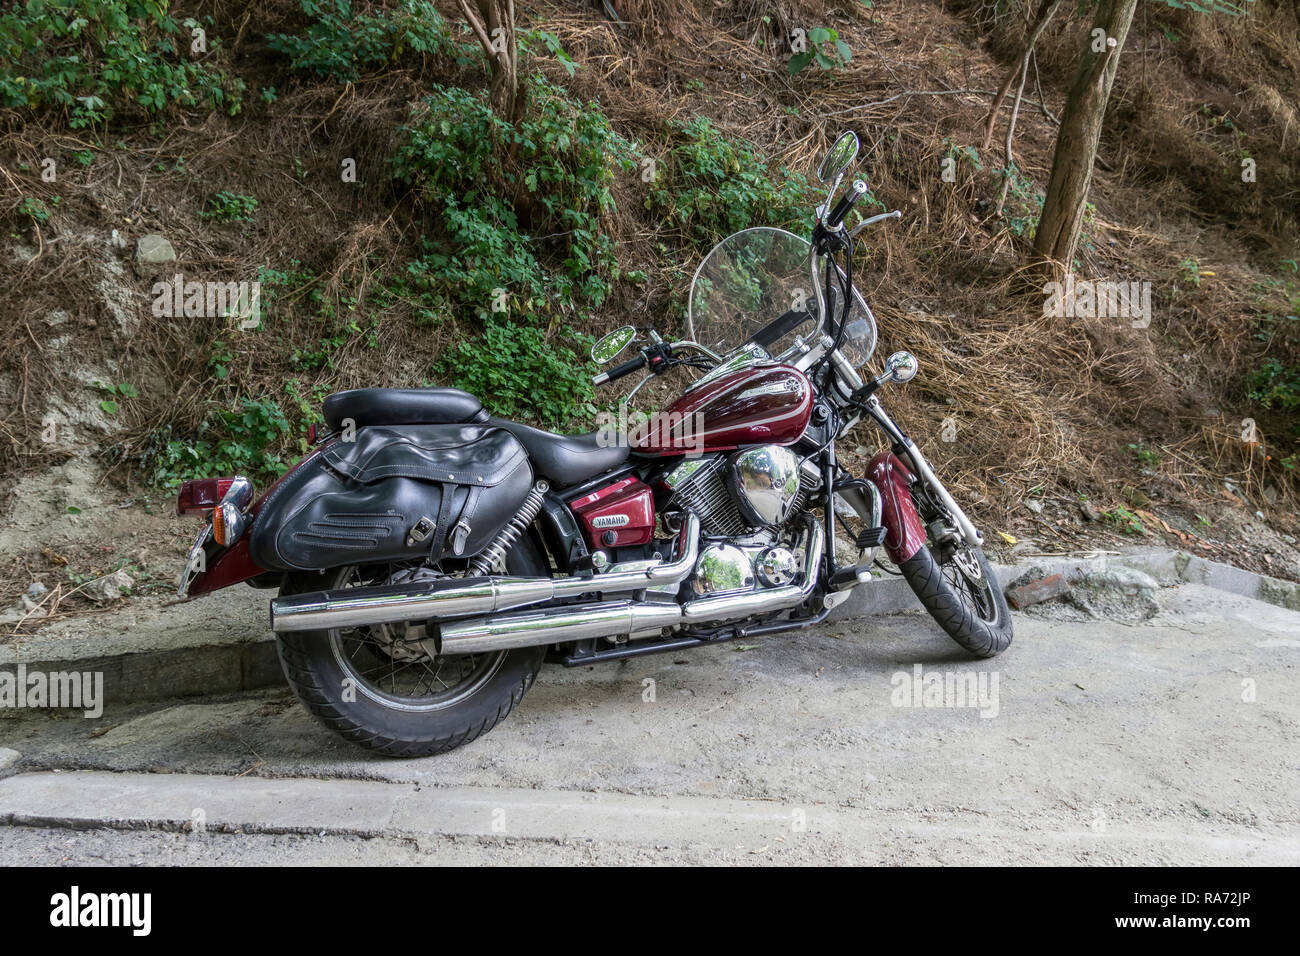 Zemun, Serbia - Yamaha Virago motorcycle parked on the road Stock Photo